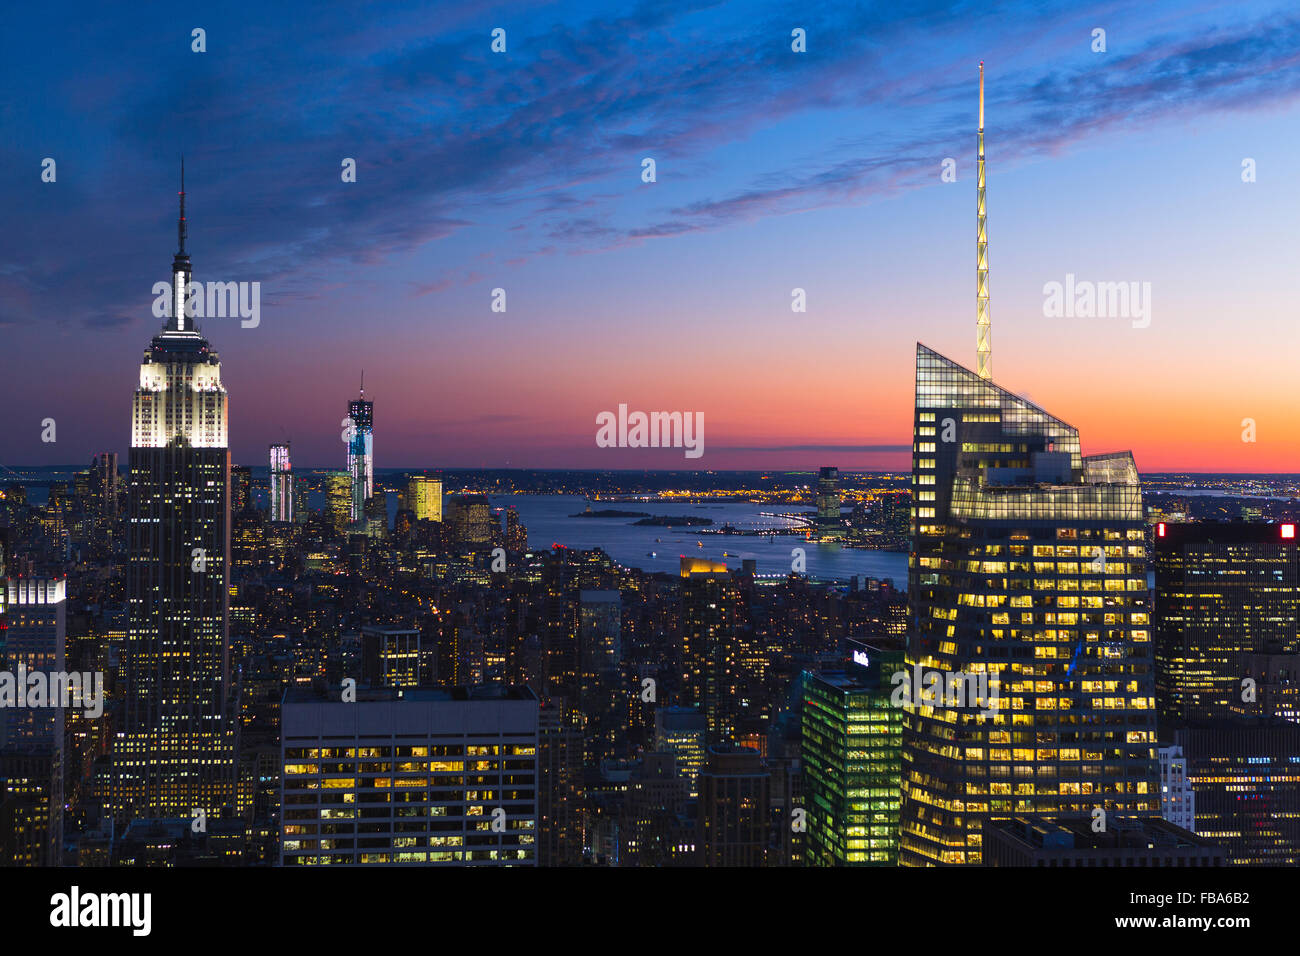 USA, New York State, New York City, Skyscrapers on Manhattan at dusk Stock Photo